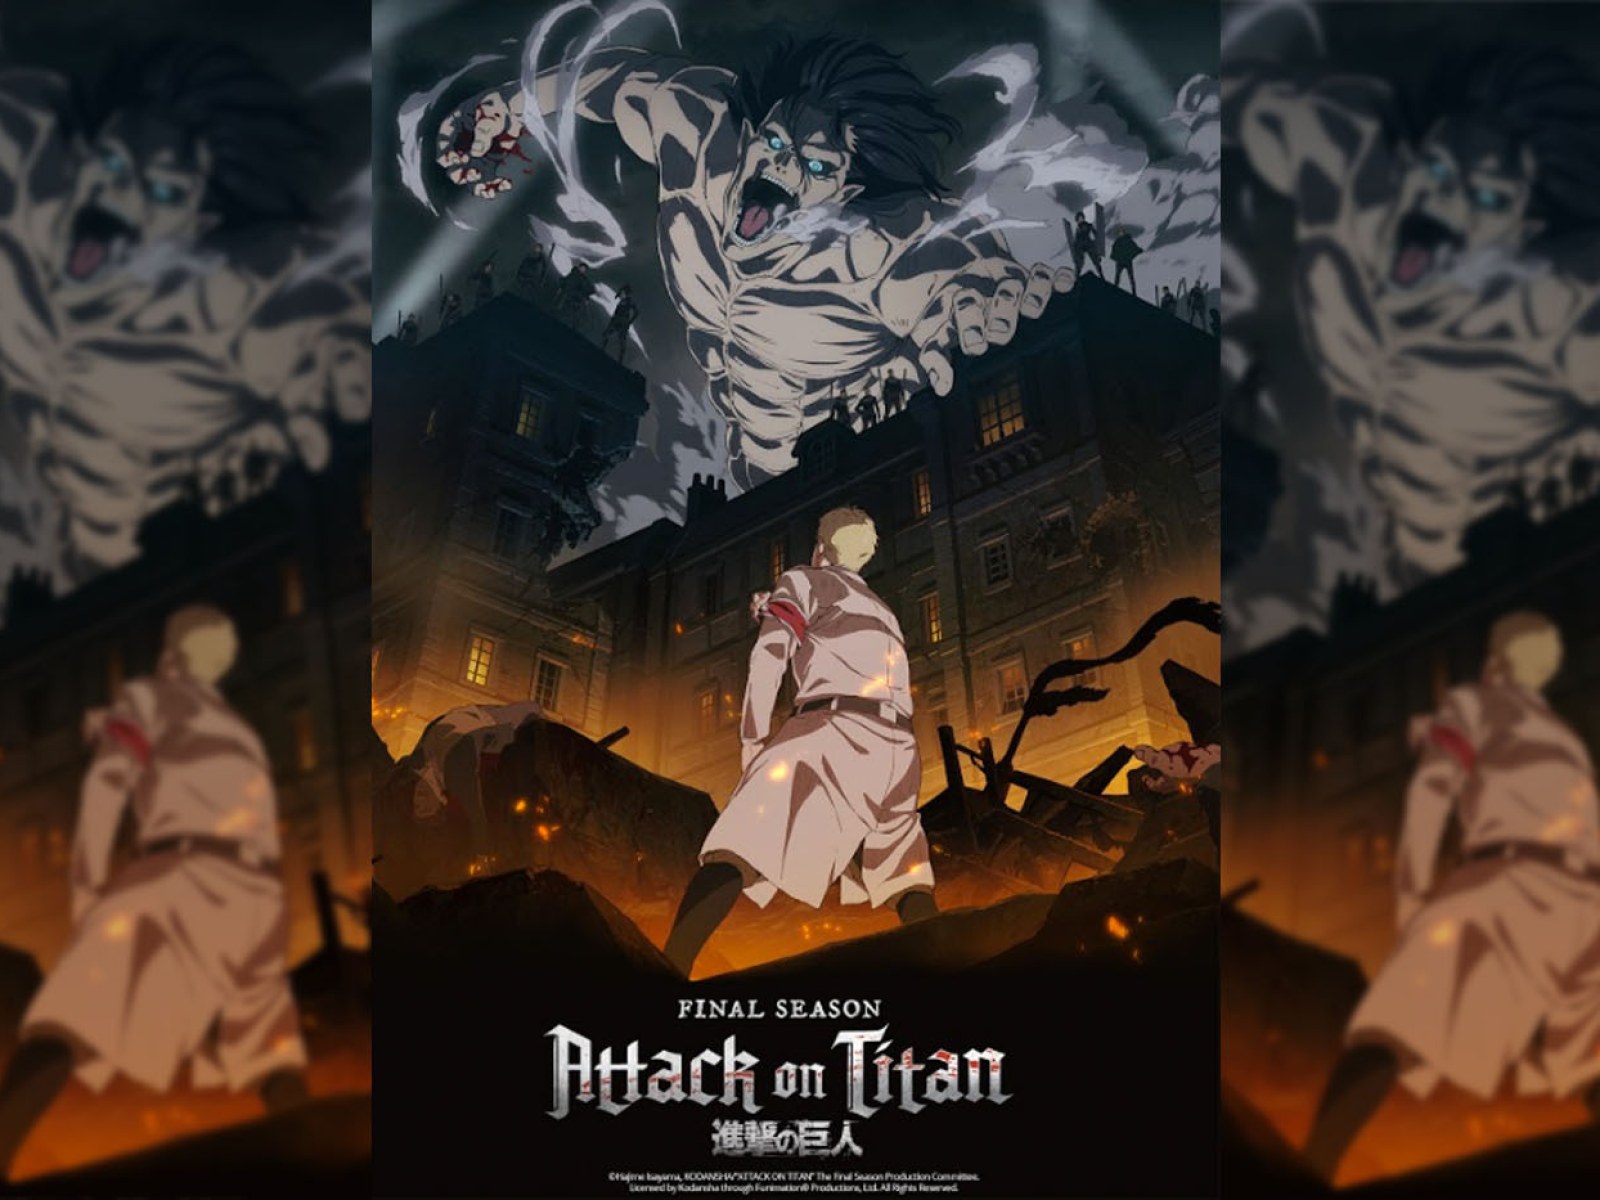 Attack on titan episode 76 release date